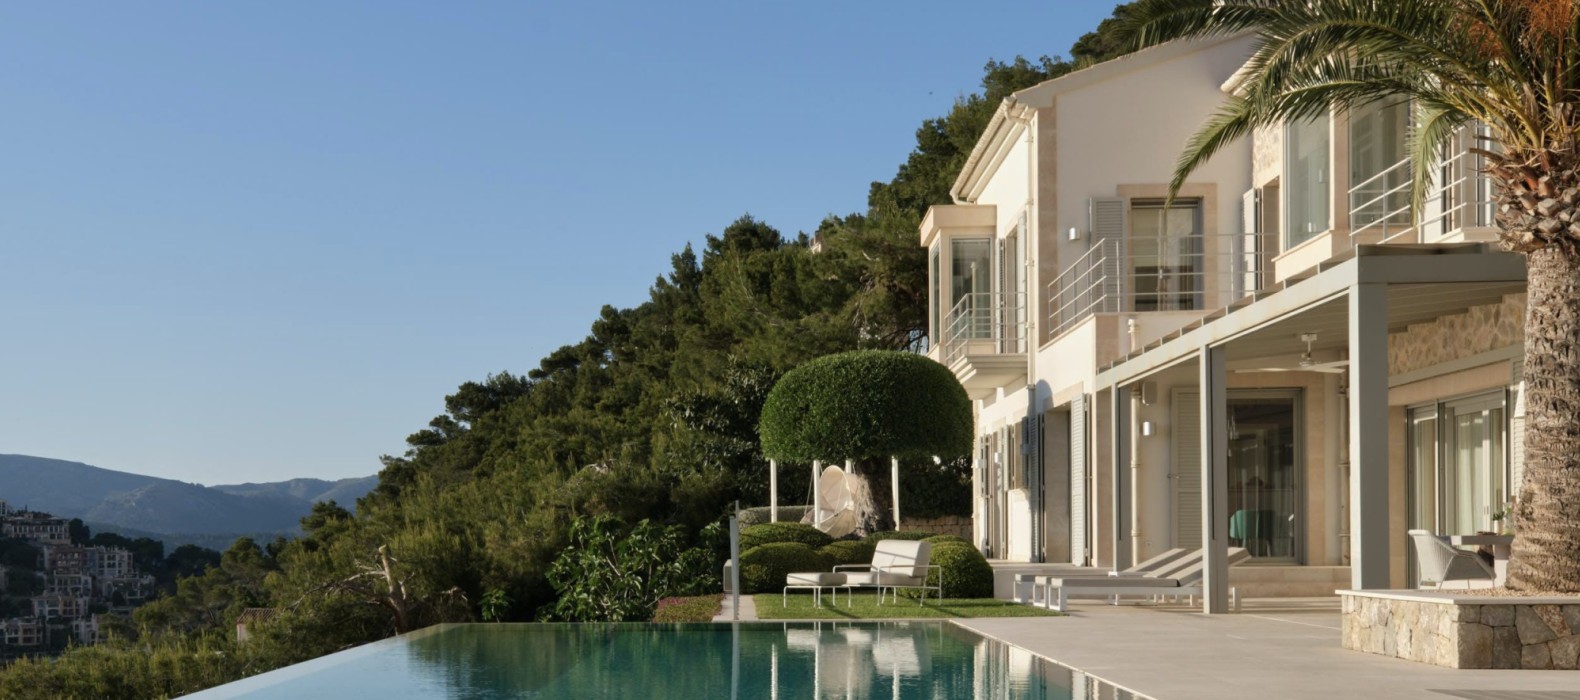 Exterior pool view of Villa The Big Blue in Mallorca